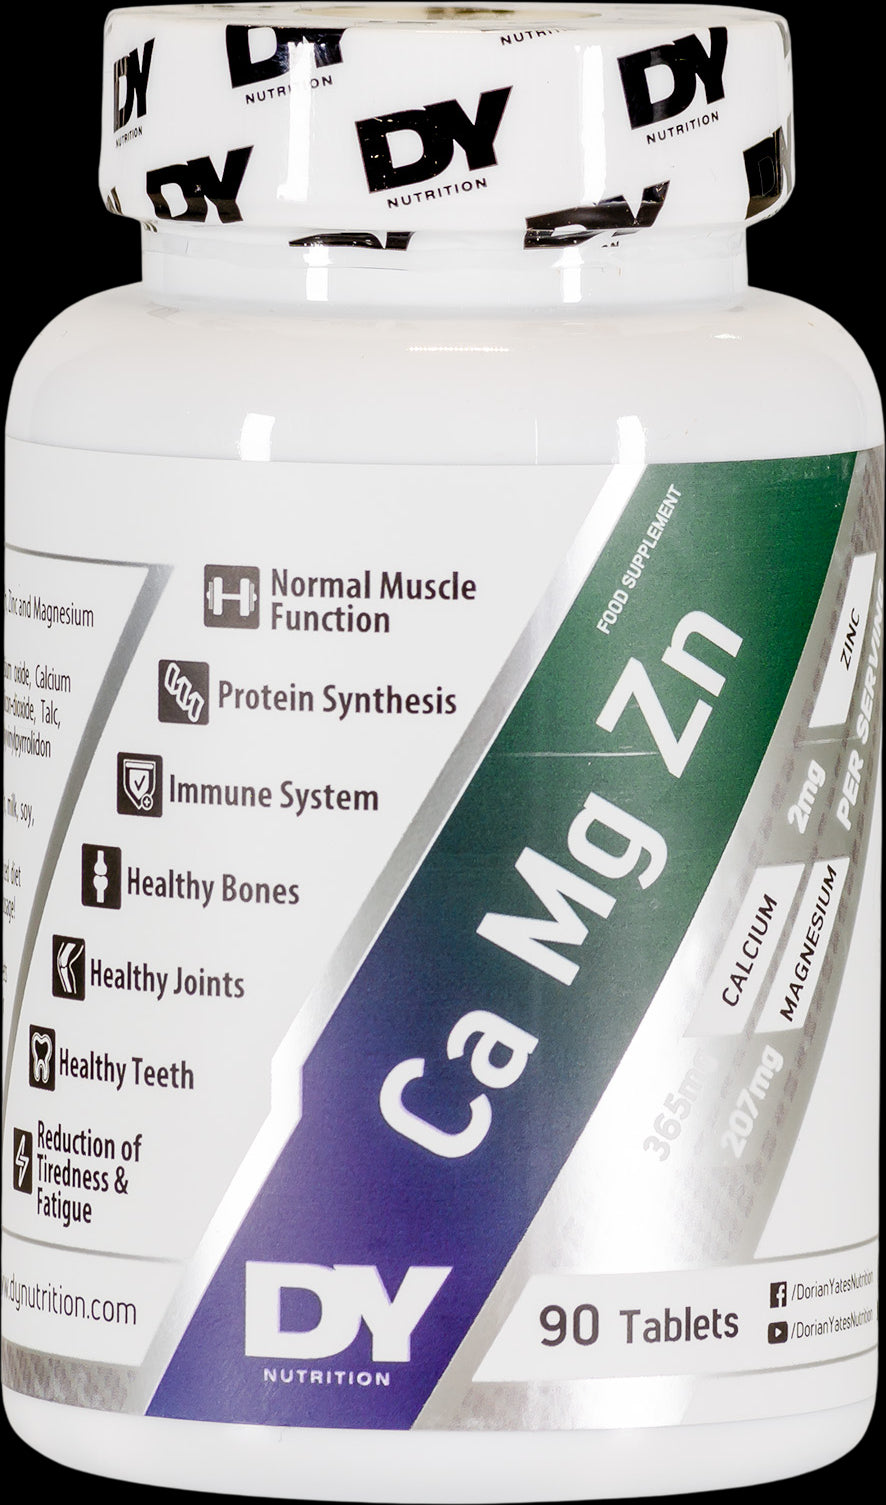 Ca Mg Zn | Calcium + Magnesium + Zinc Formula - BadiZdrav.BG